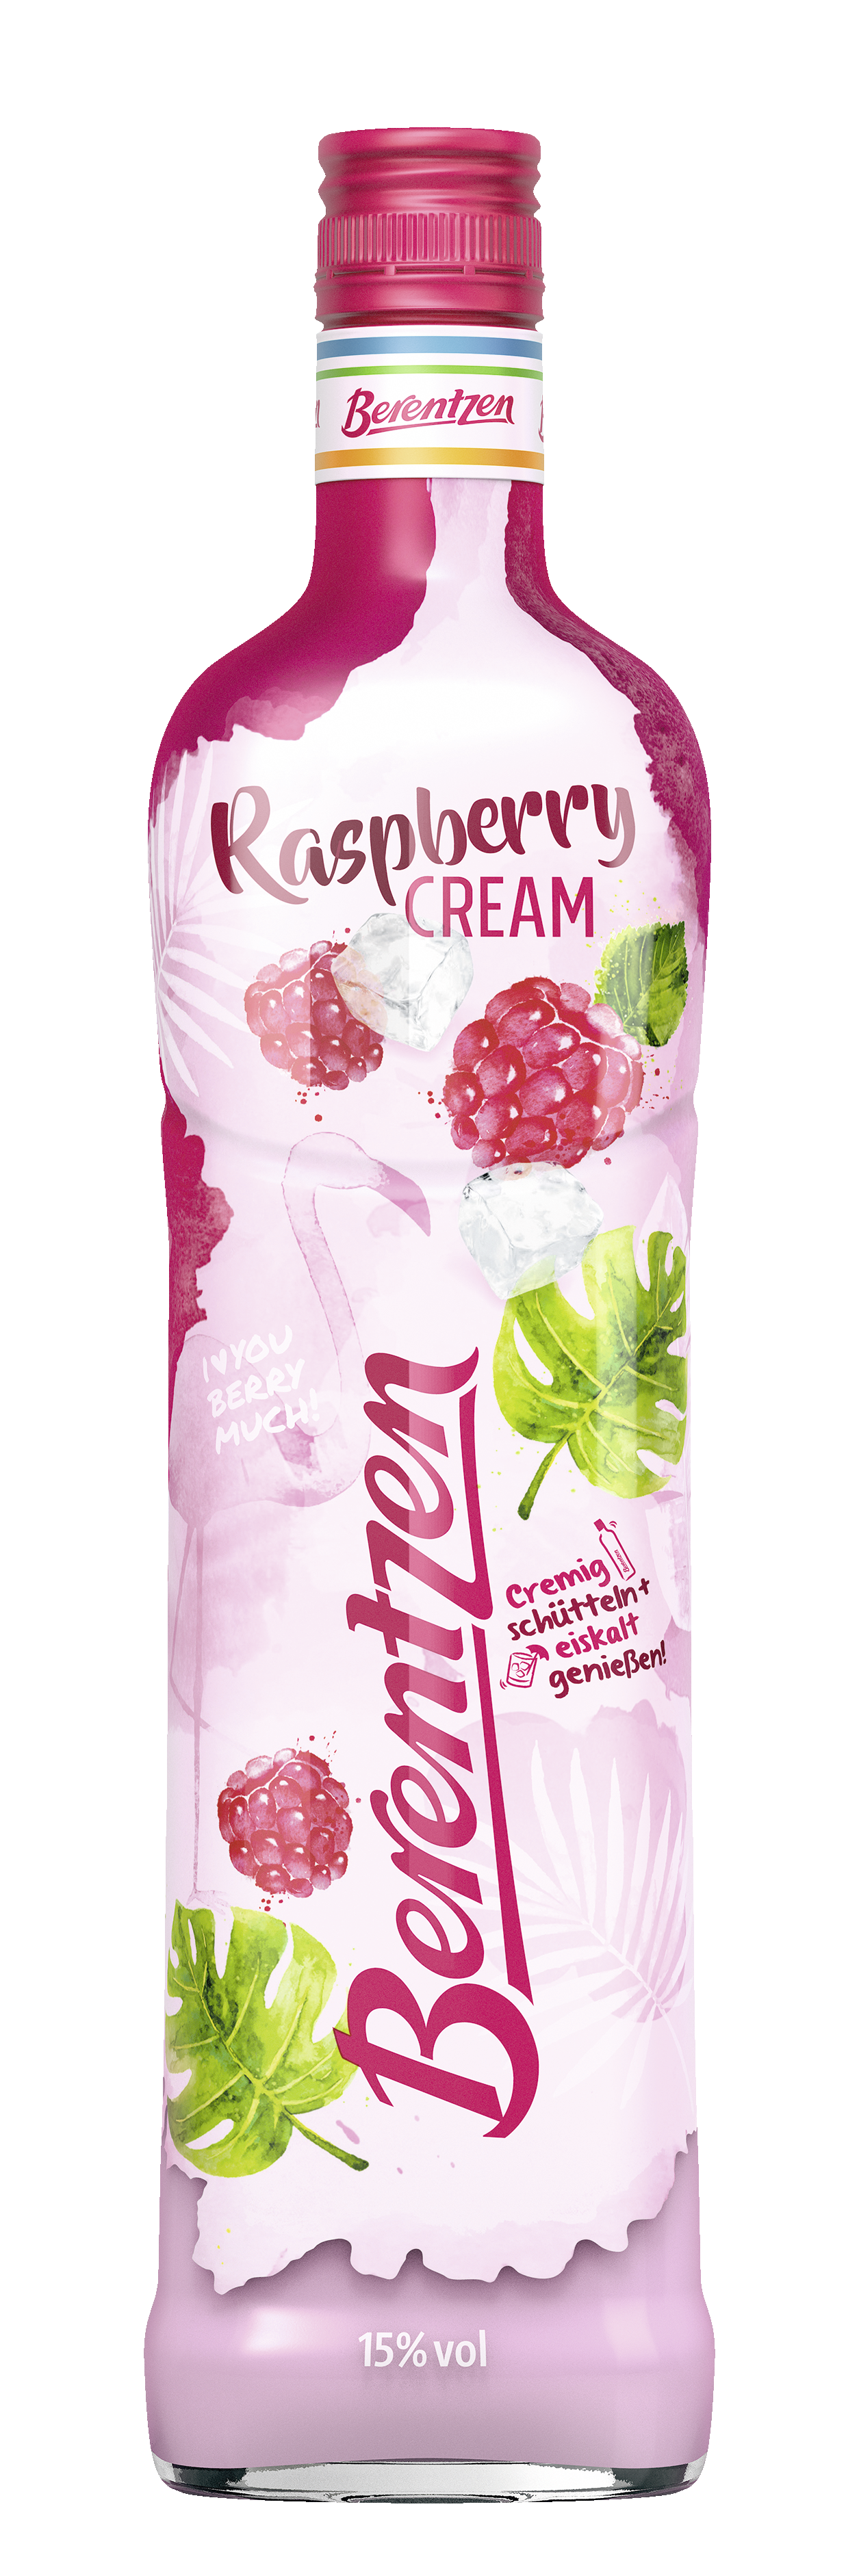 Berentzen - Raspberry Cream - Likör 0,7l 15vol.